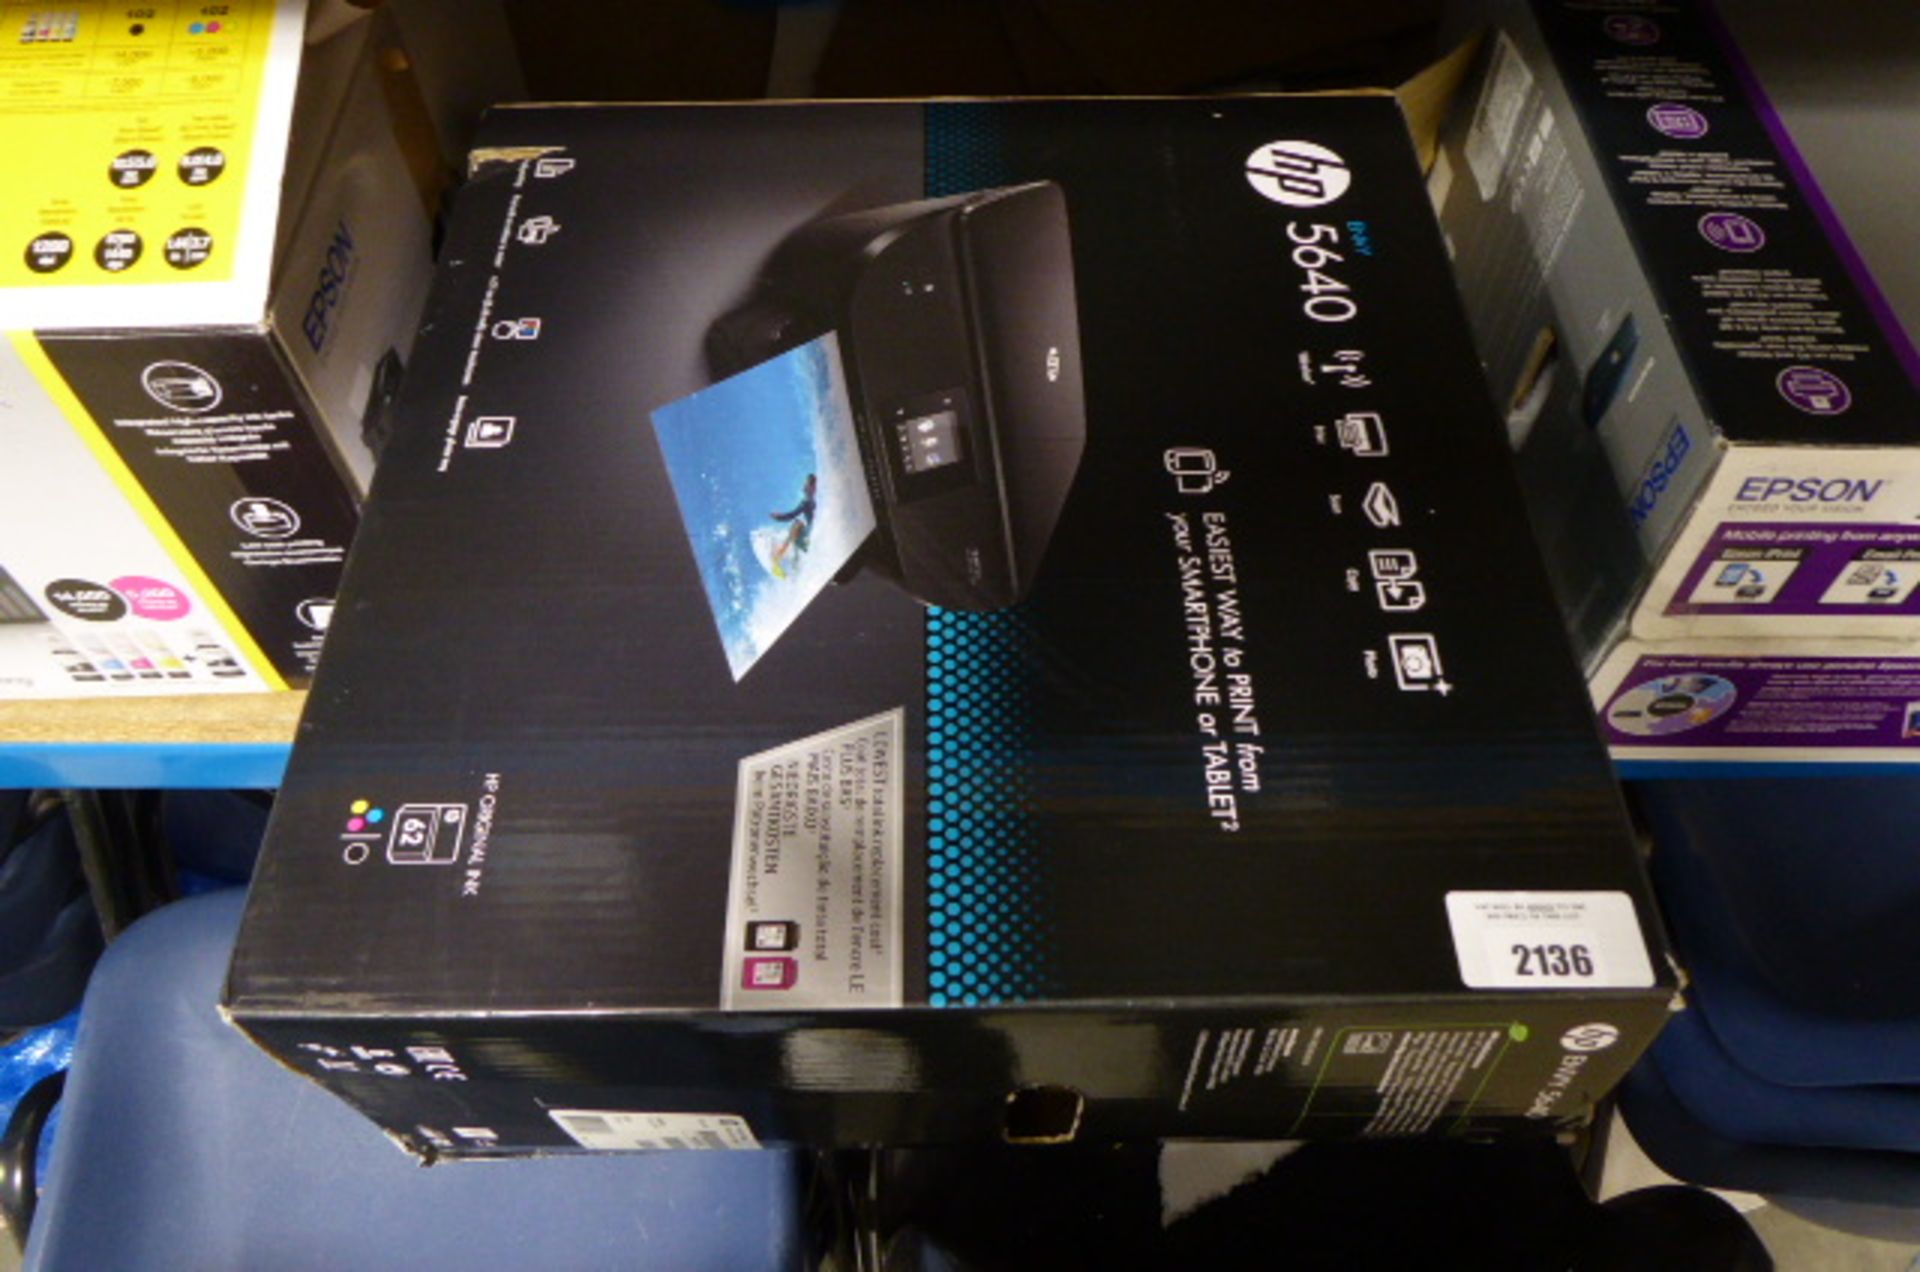 Boxed HP 5640 printer